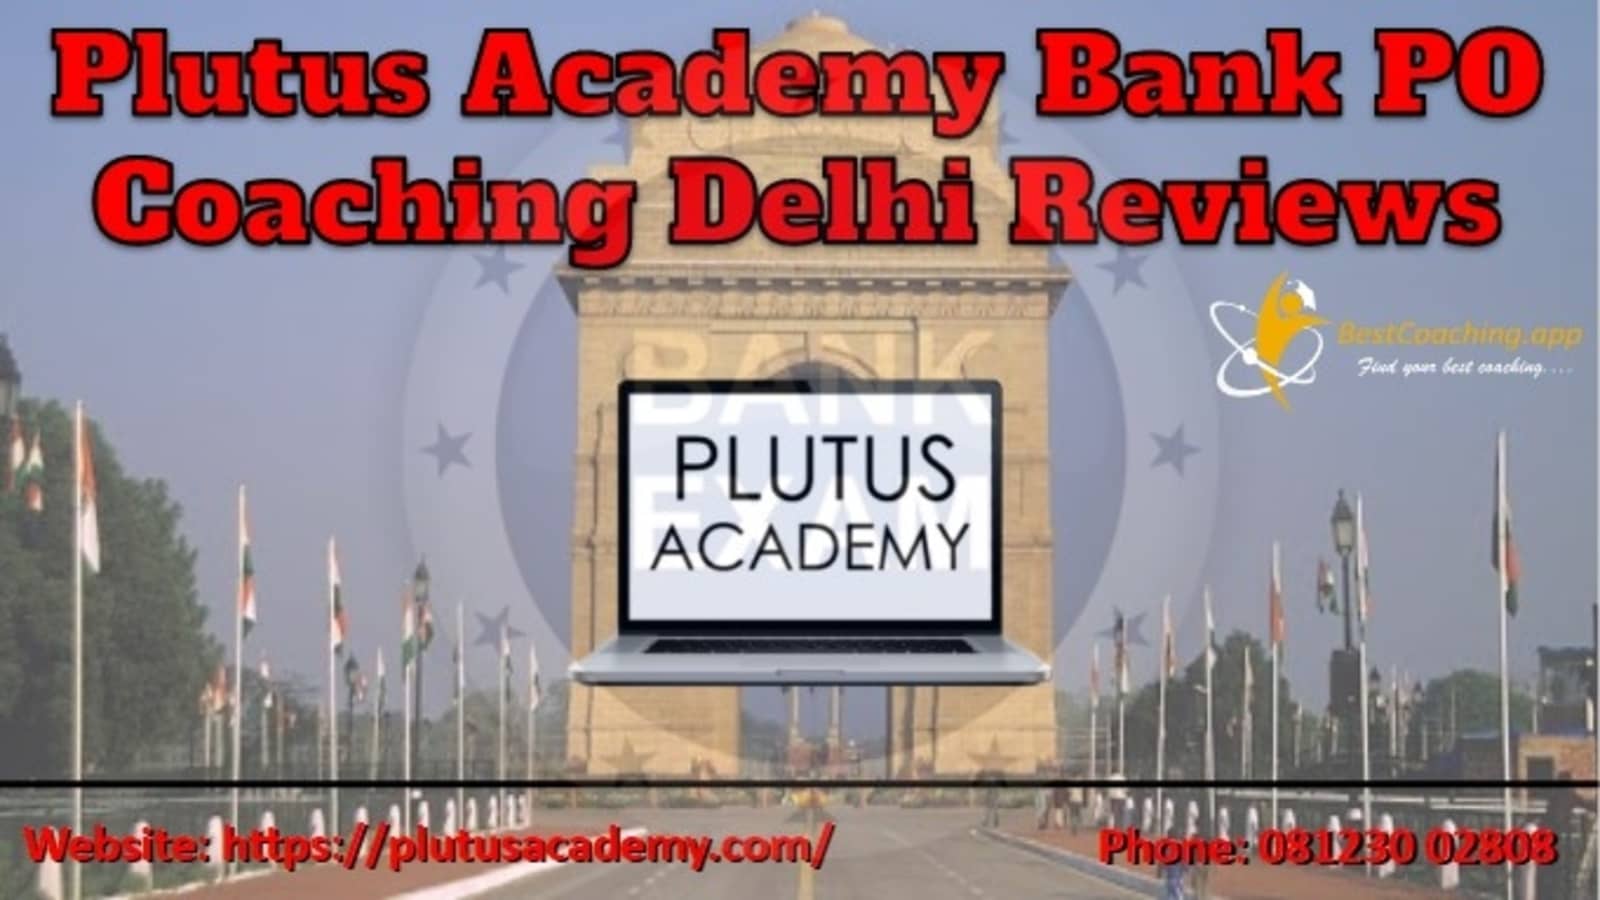 Plutus Academy Bank PO Coaching Delhi Reviews